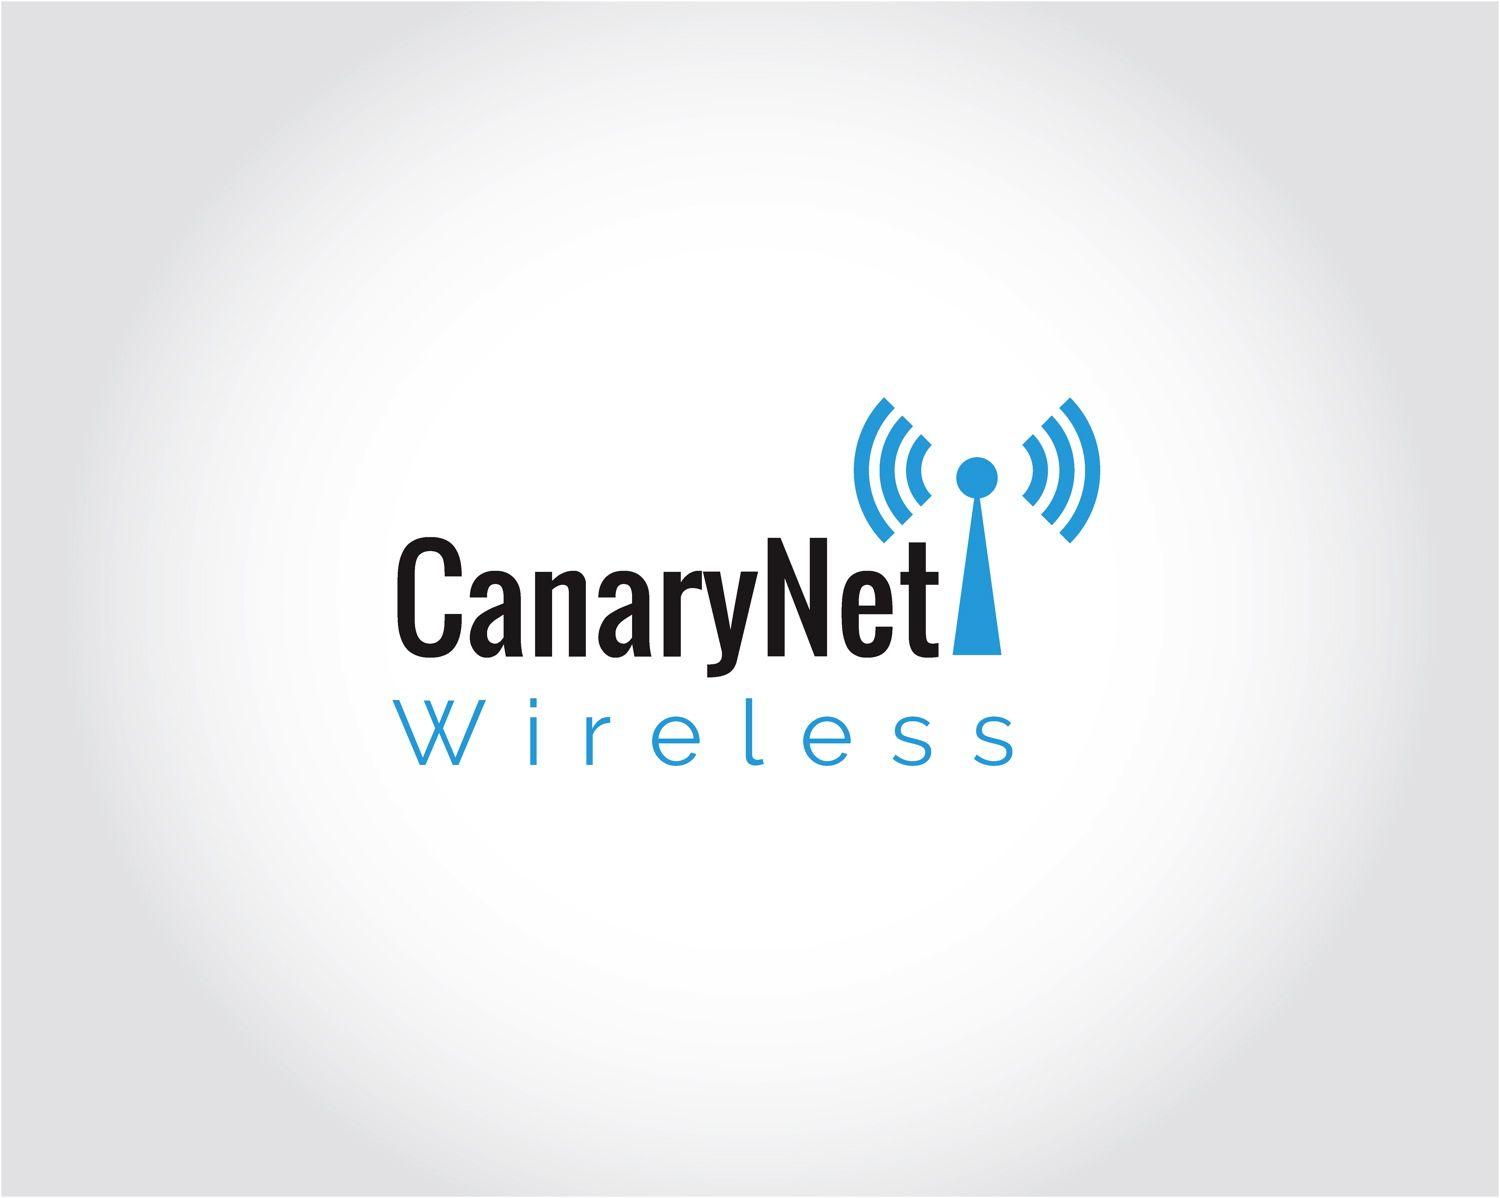 Internet Company Logo - Professional, Upmarket, Internet Logo Design for CanaryNet wireless ...